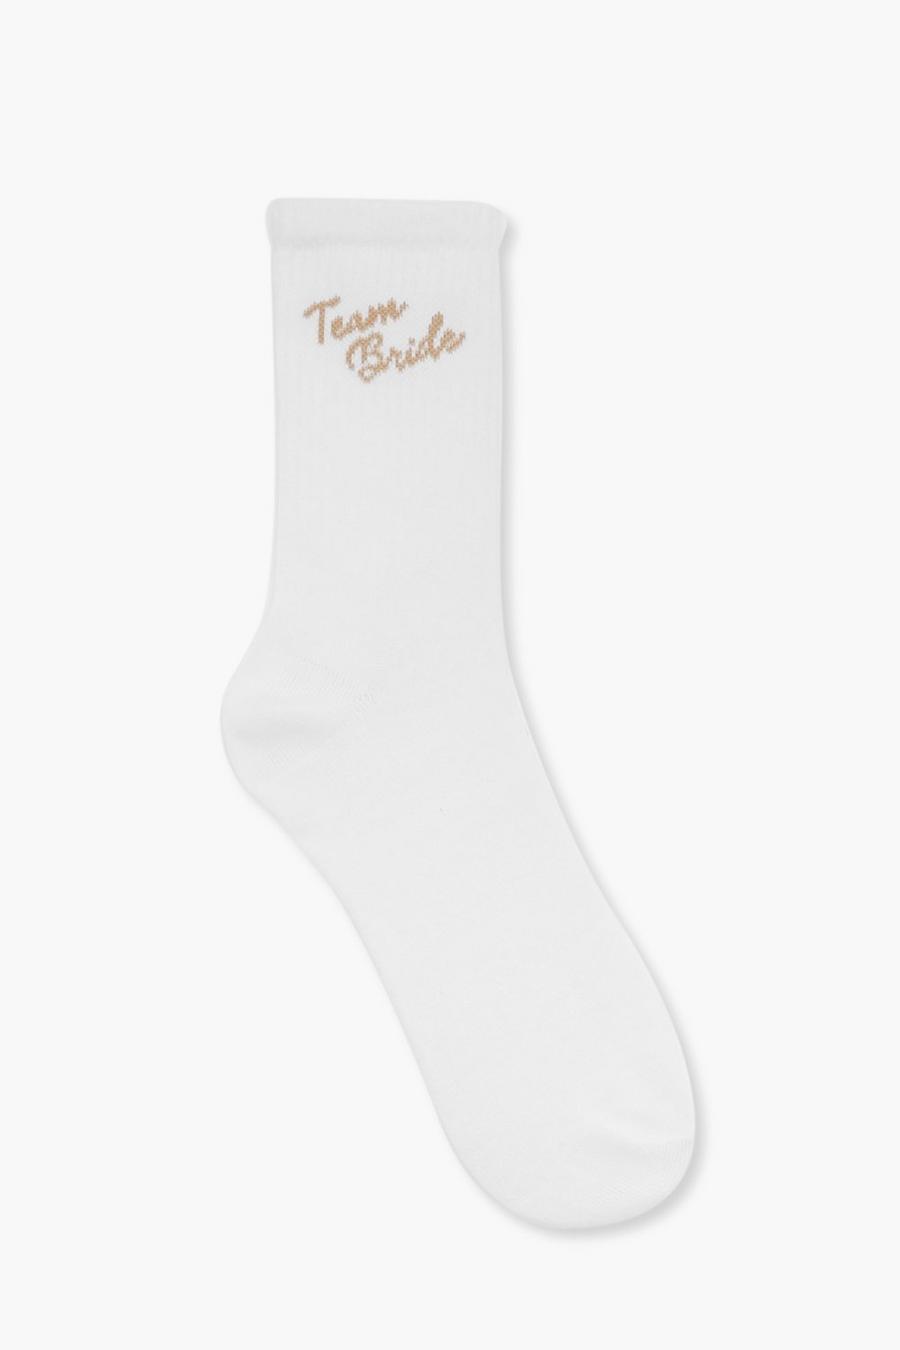 Team Bride Socks, White blanco